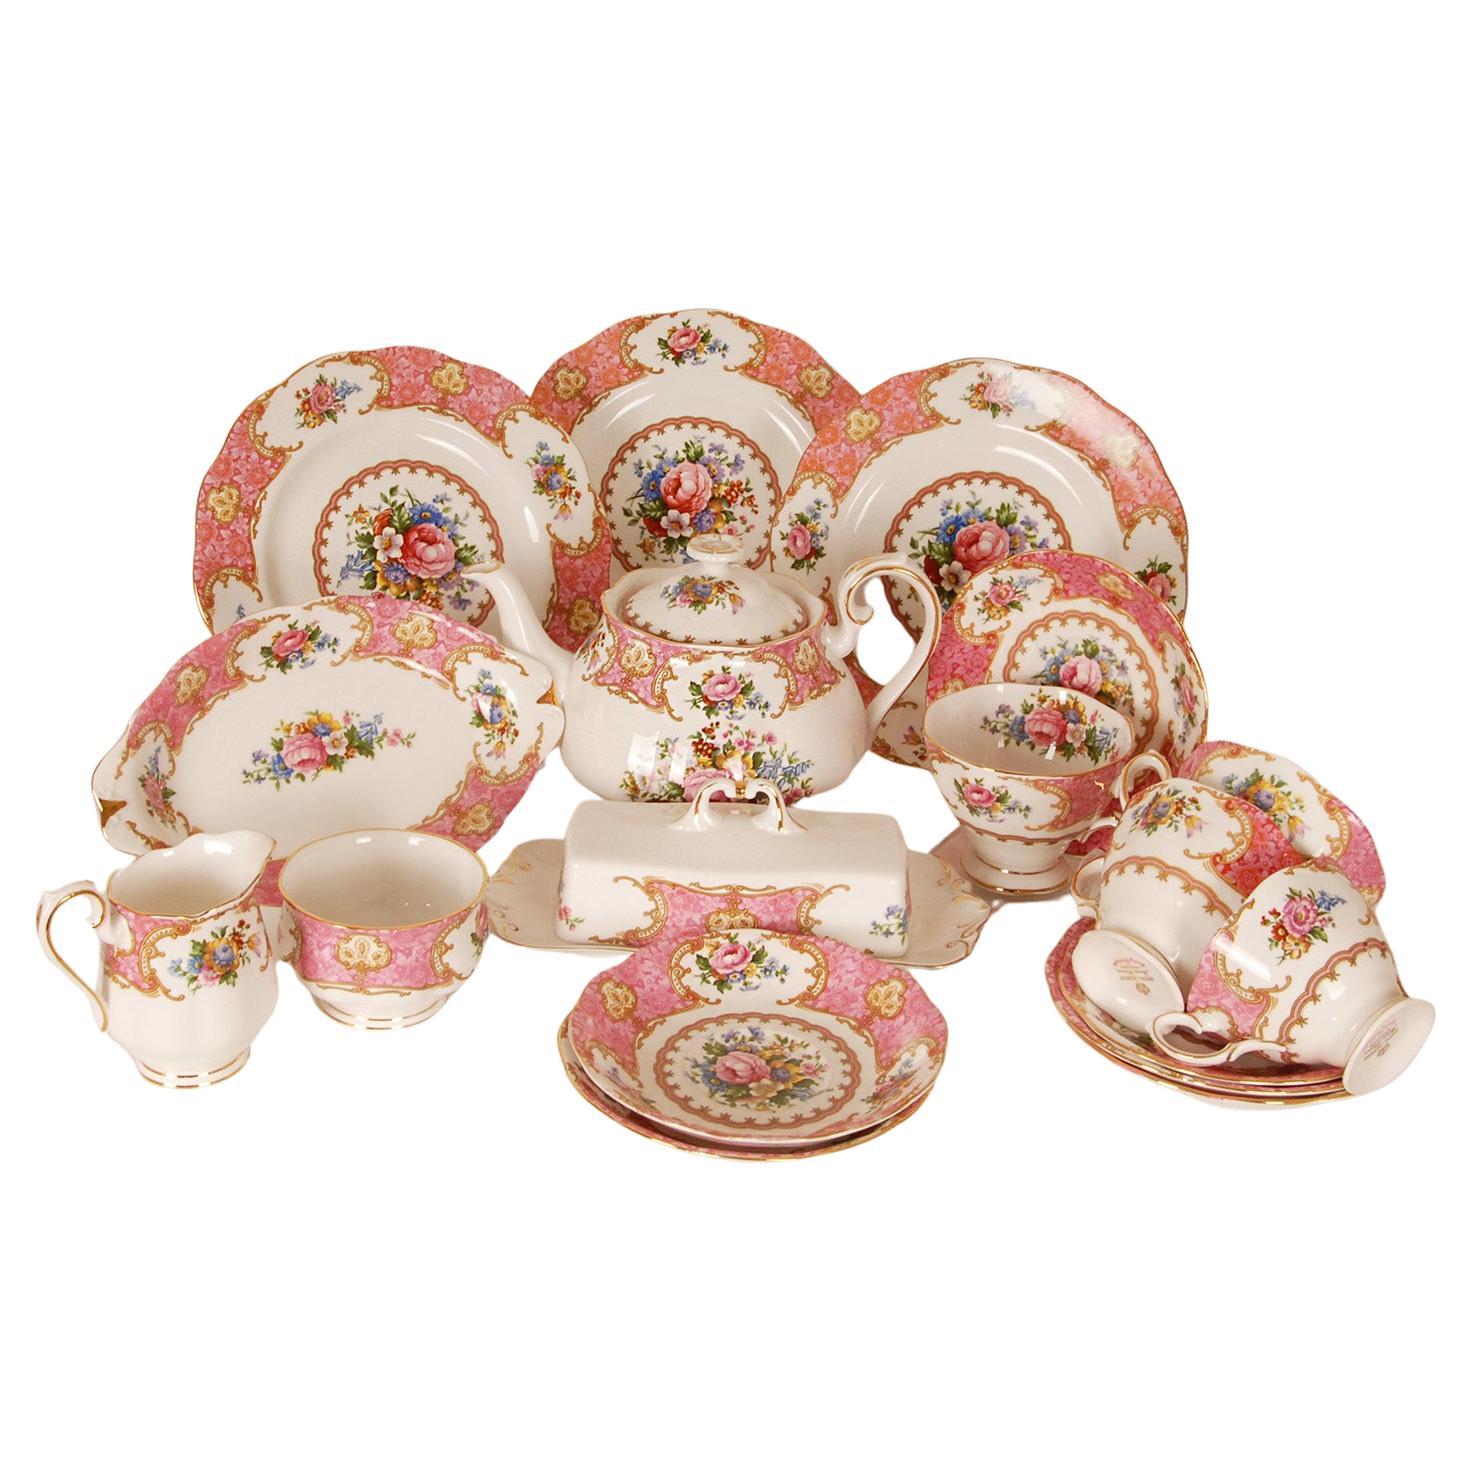 Vintage Royal Albert Bone China Tea Set and Plates Lady Carlyle Pattern 14 Pcs